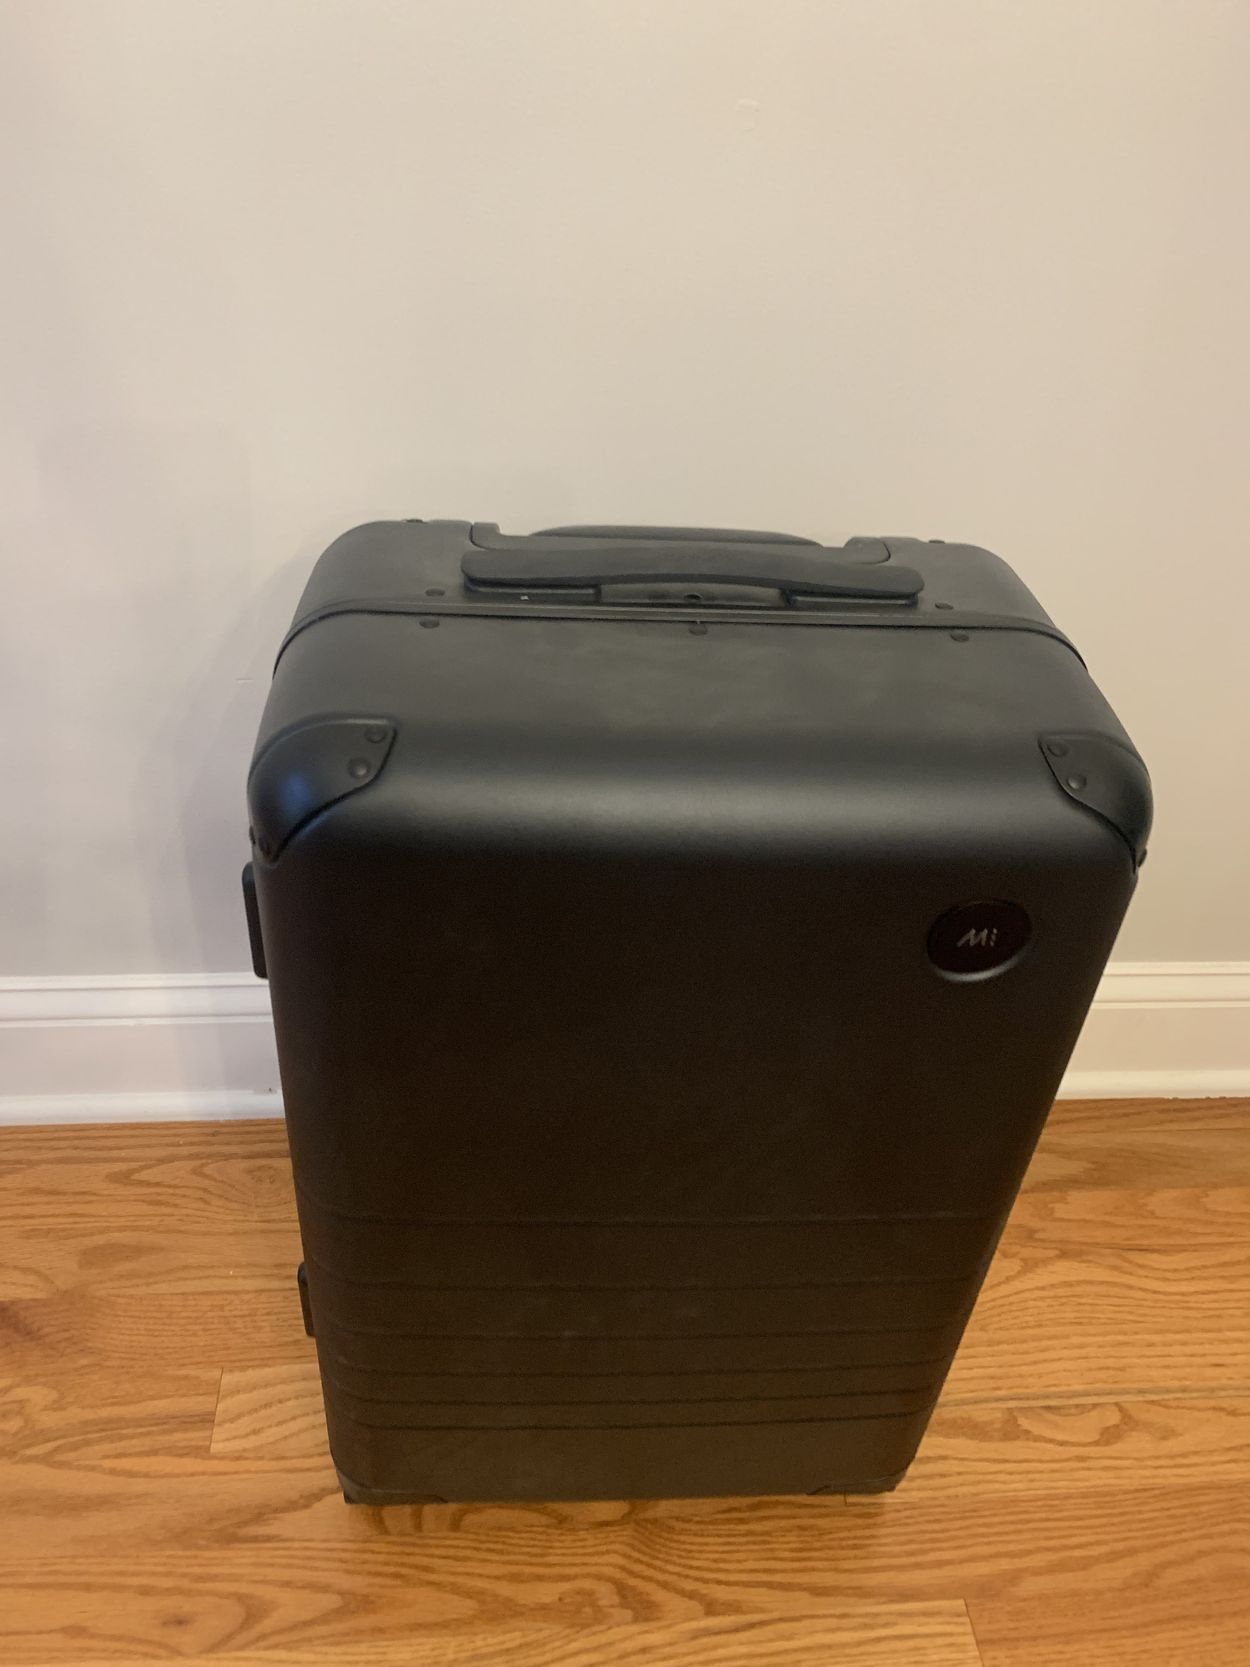 Monos hybrid carry-on luggage